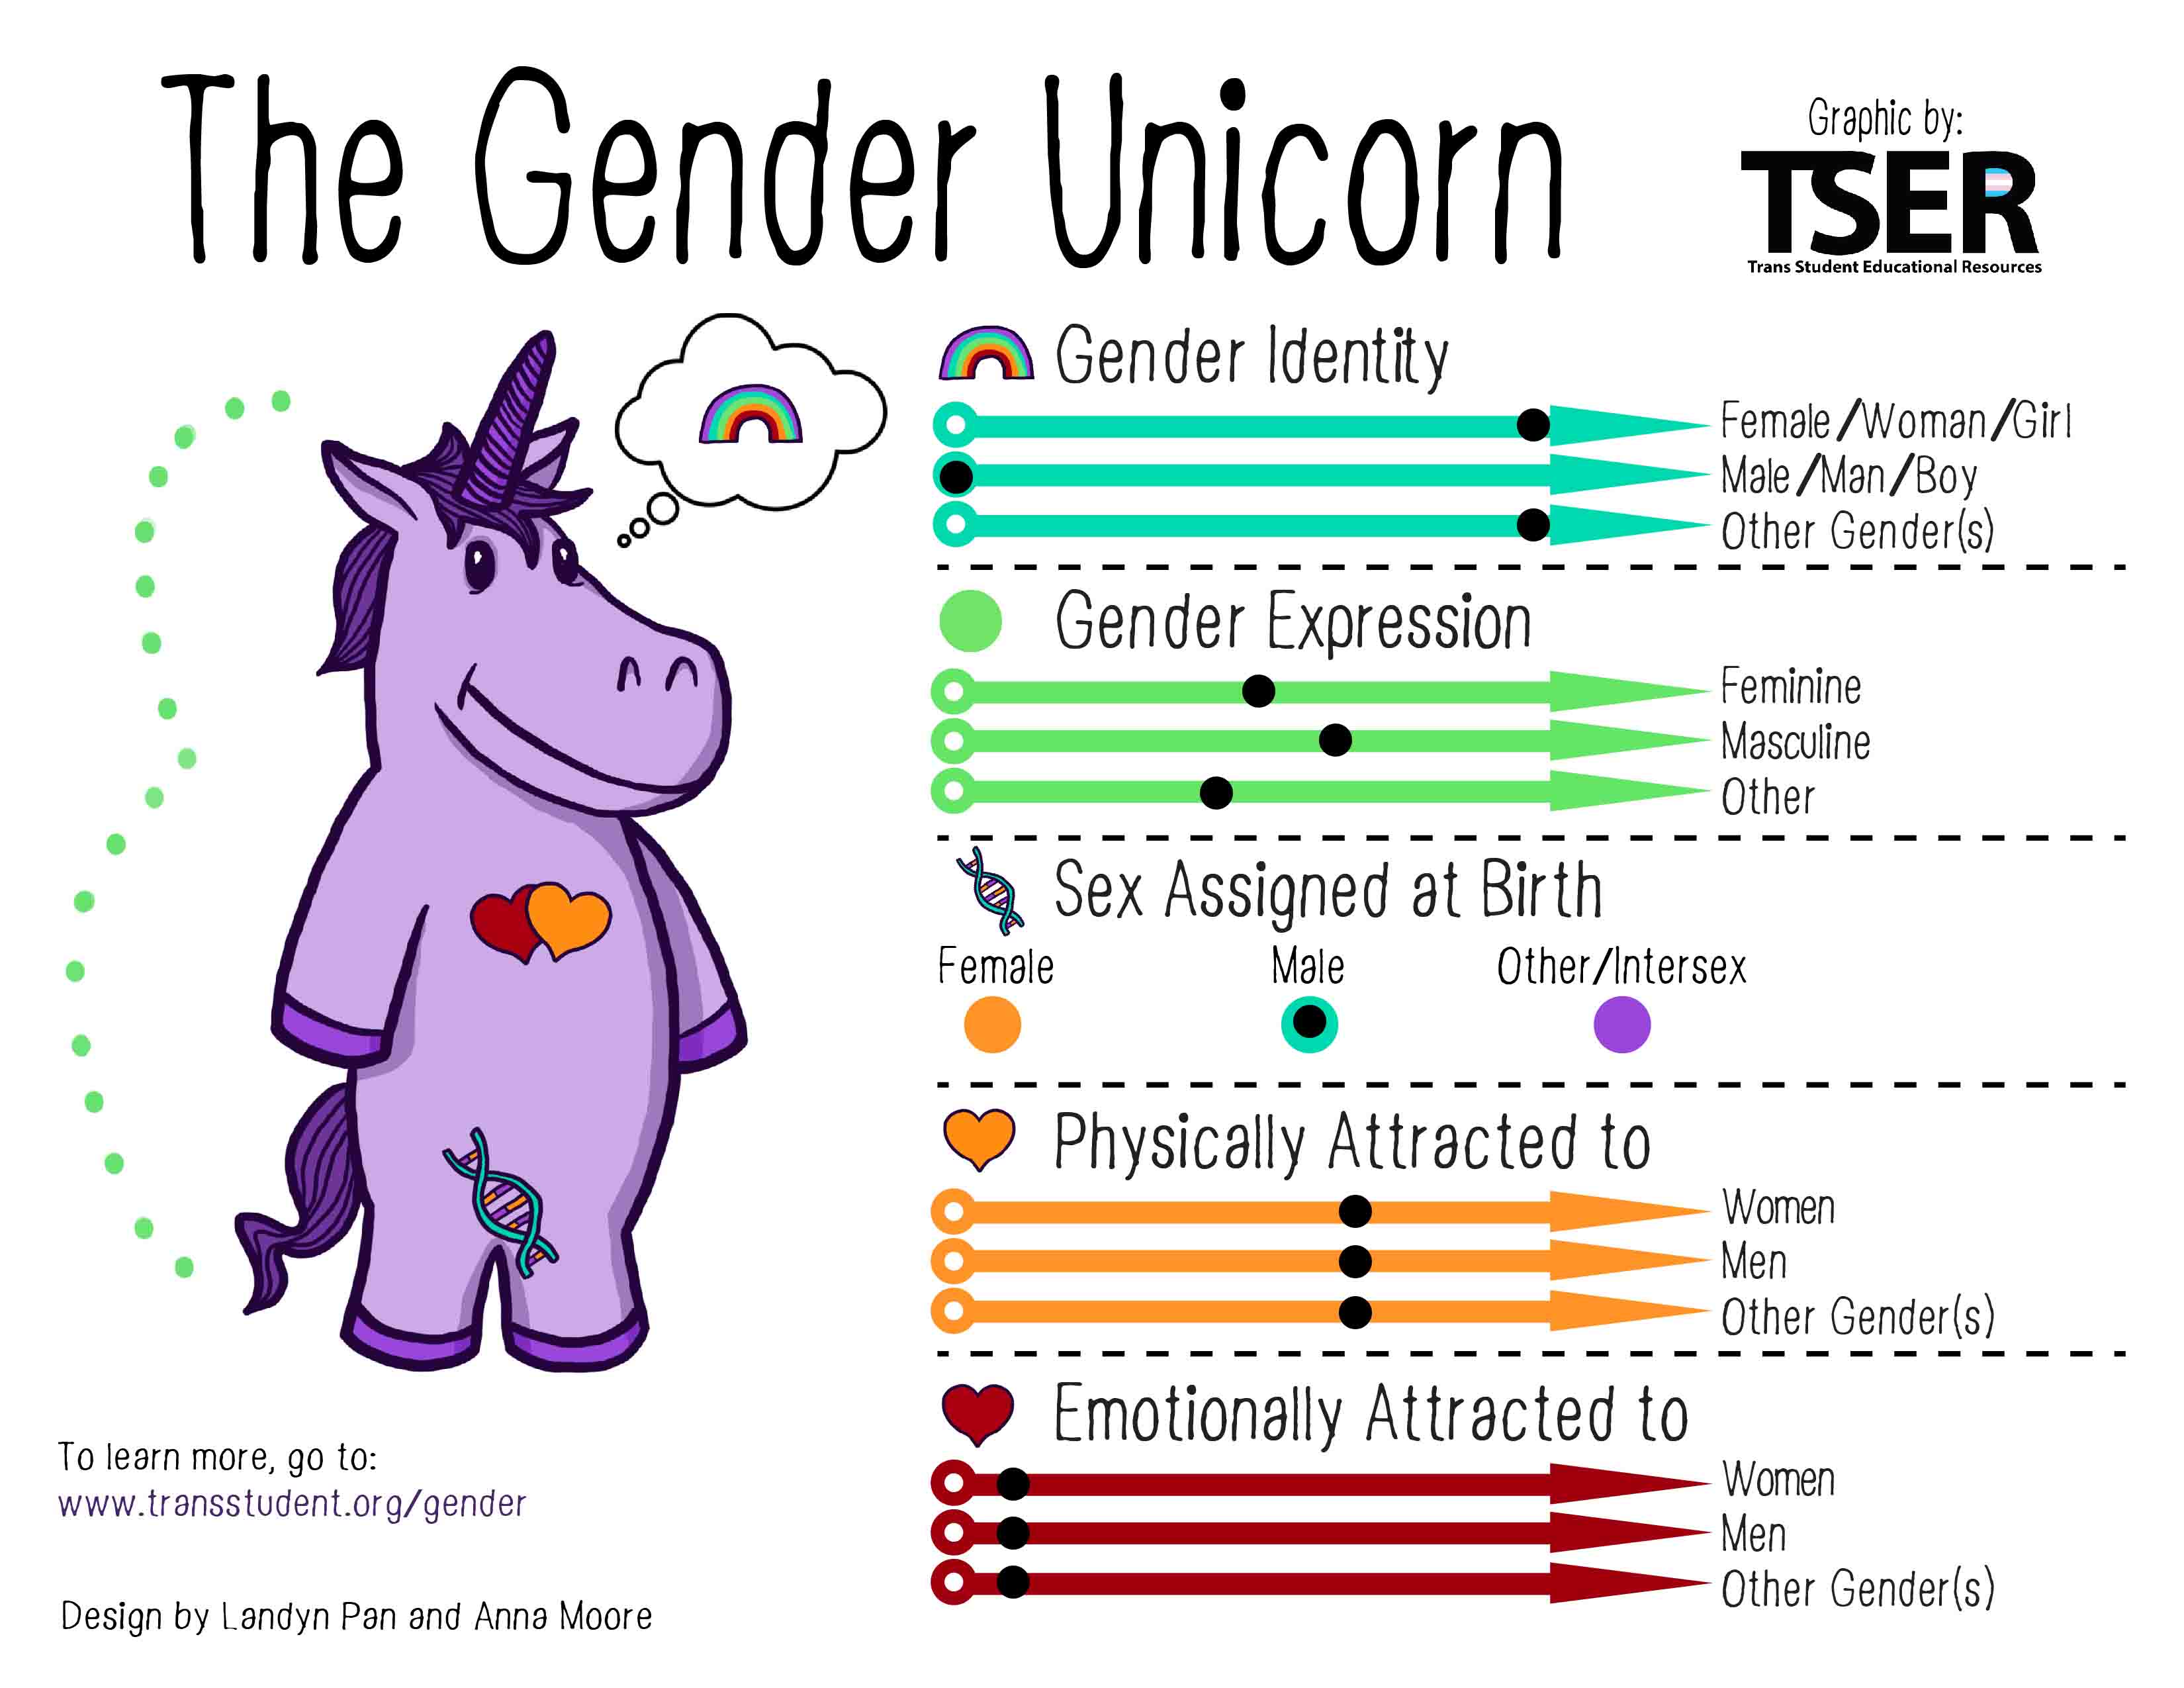 a cartoon unicorn with text and rainbows